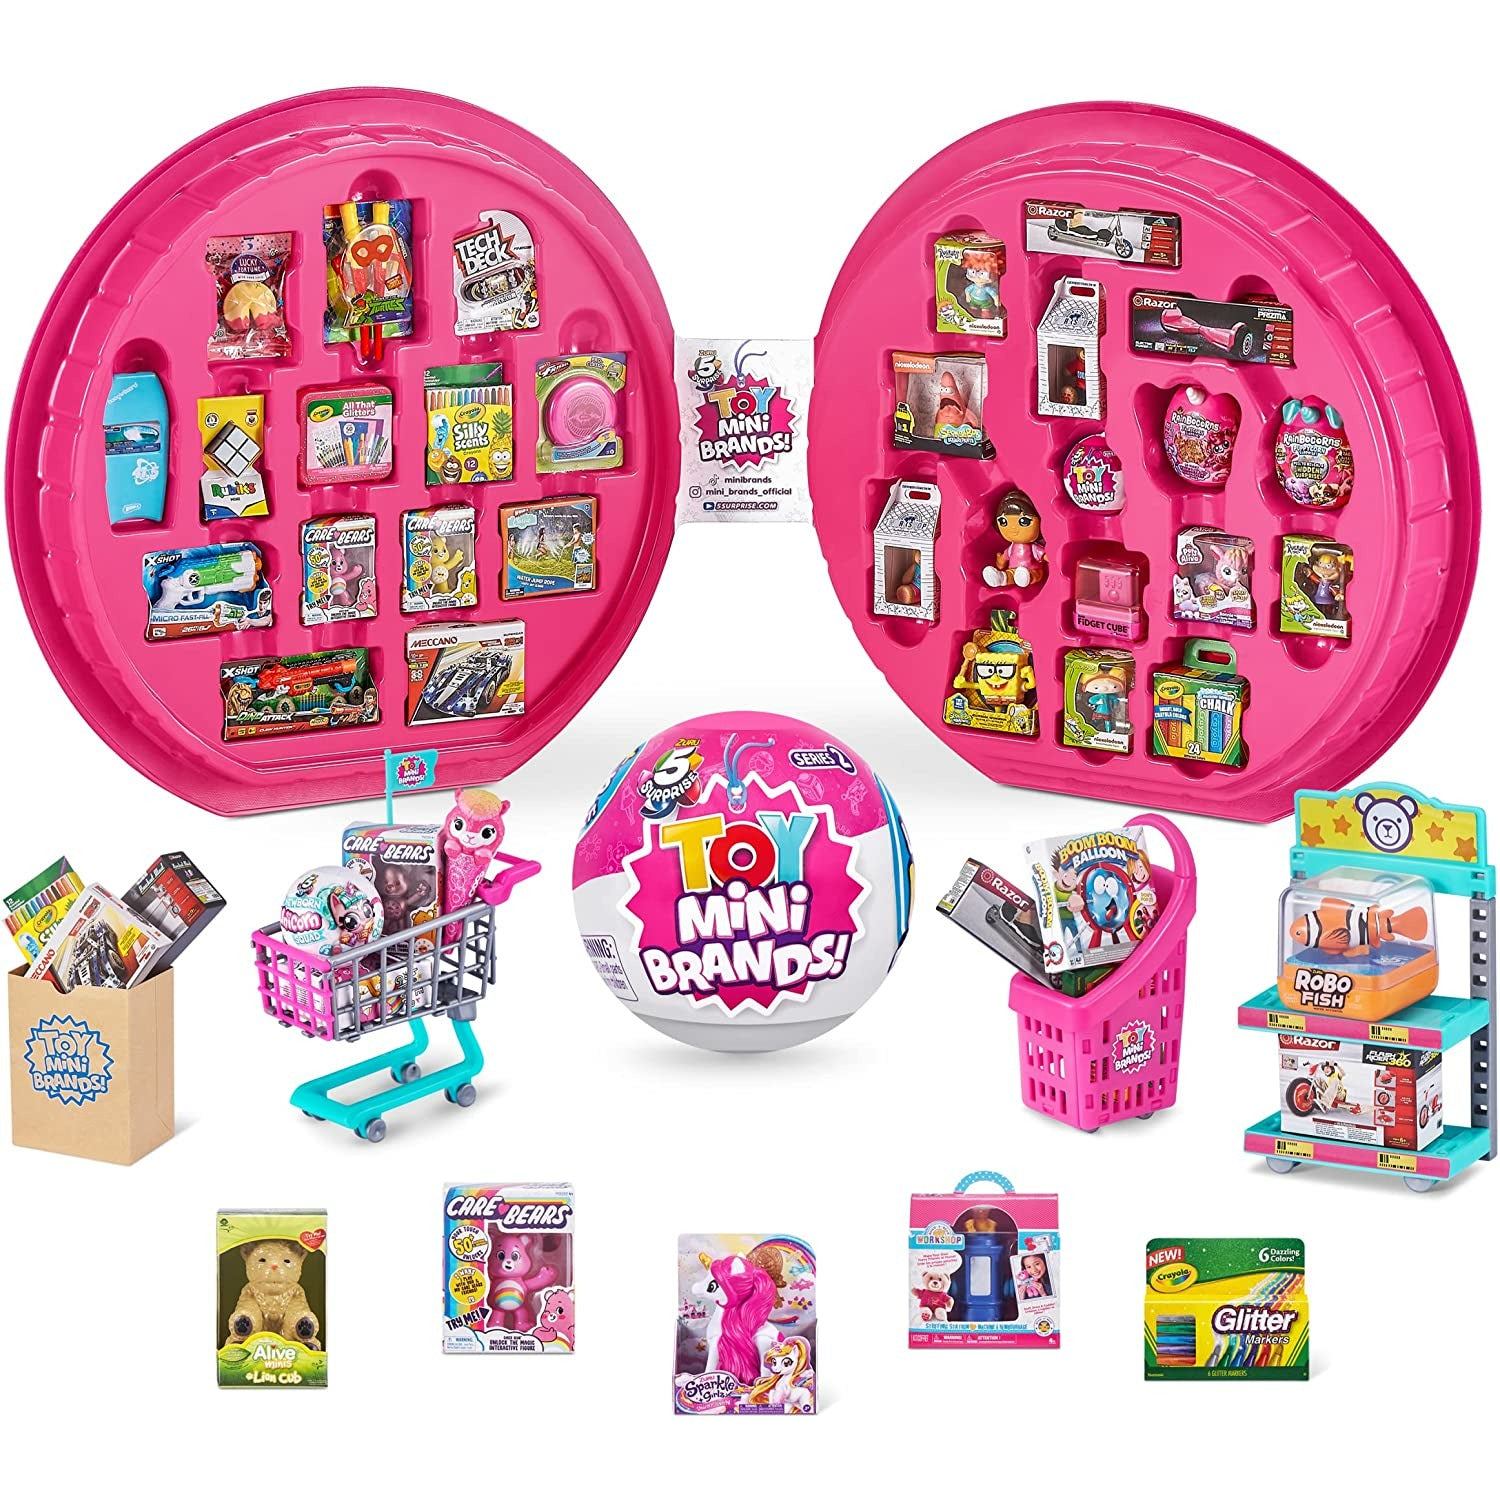 Zuru 5 Surprise Toy Mini Brands Collector's Case with Minis, 5 pc - Ralphs